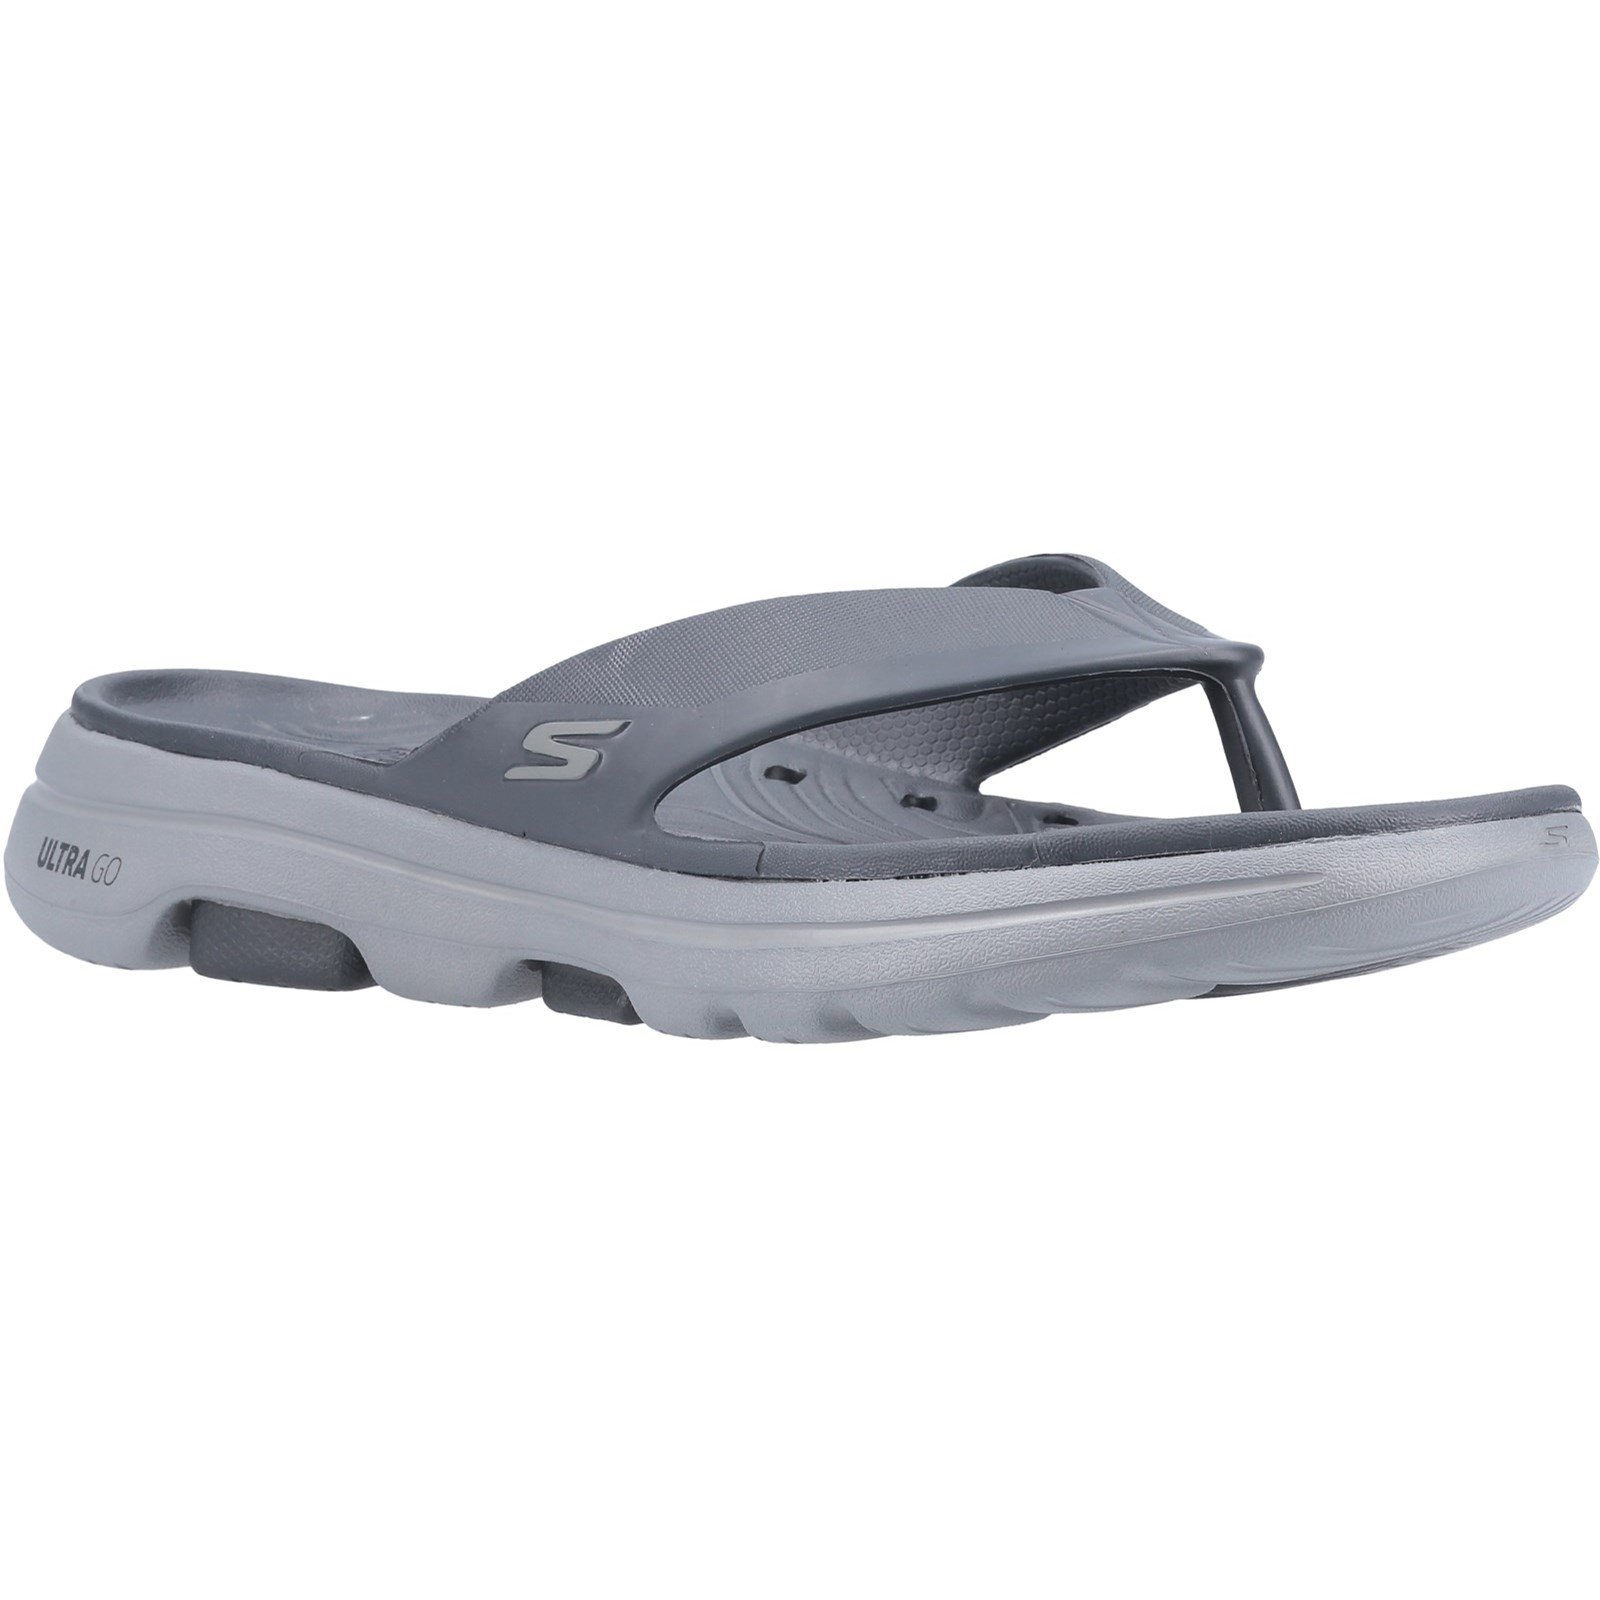 Skechers Men's GOwalk 5 Cabana Toe Post Sandal Charcoal 32207 - Charcoal 8